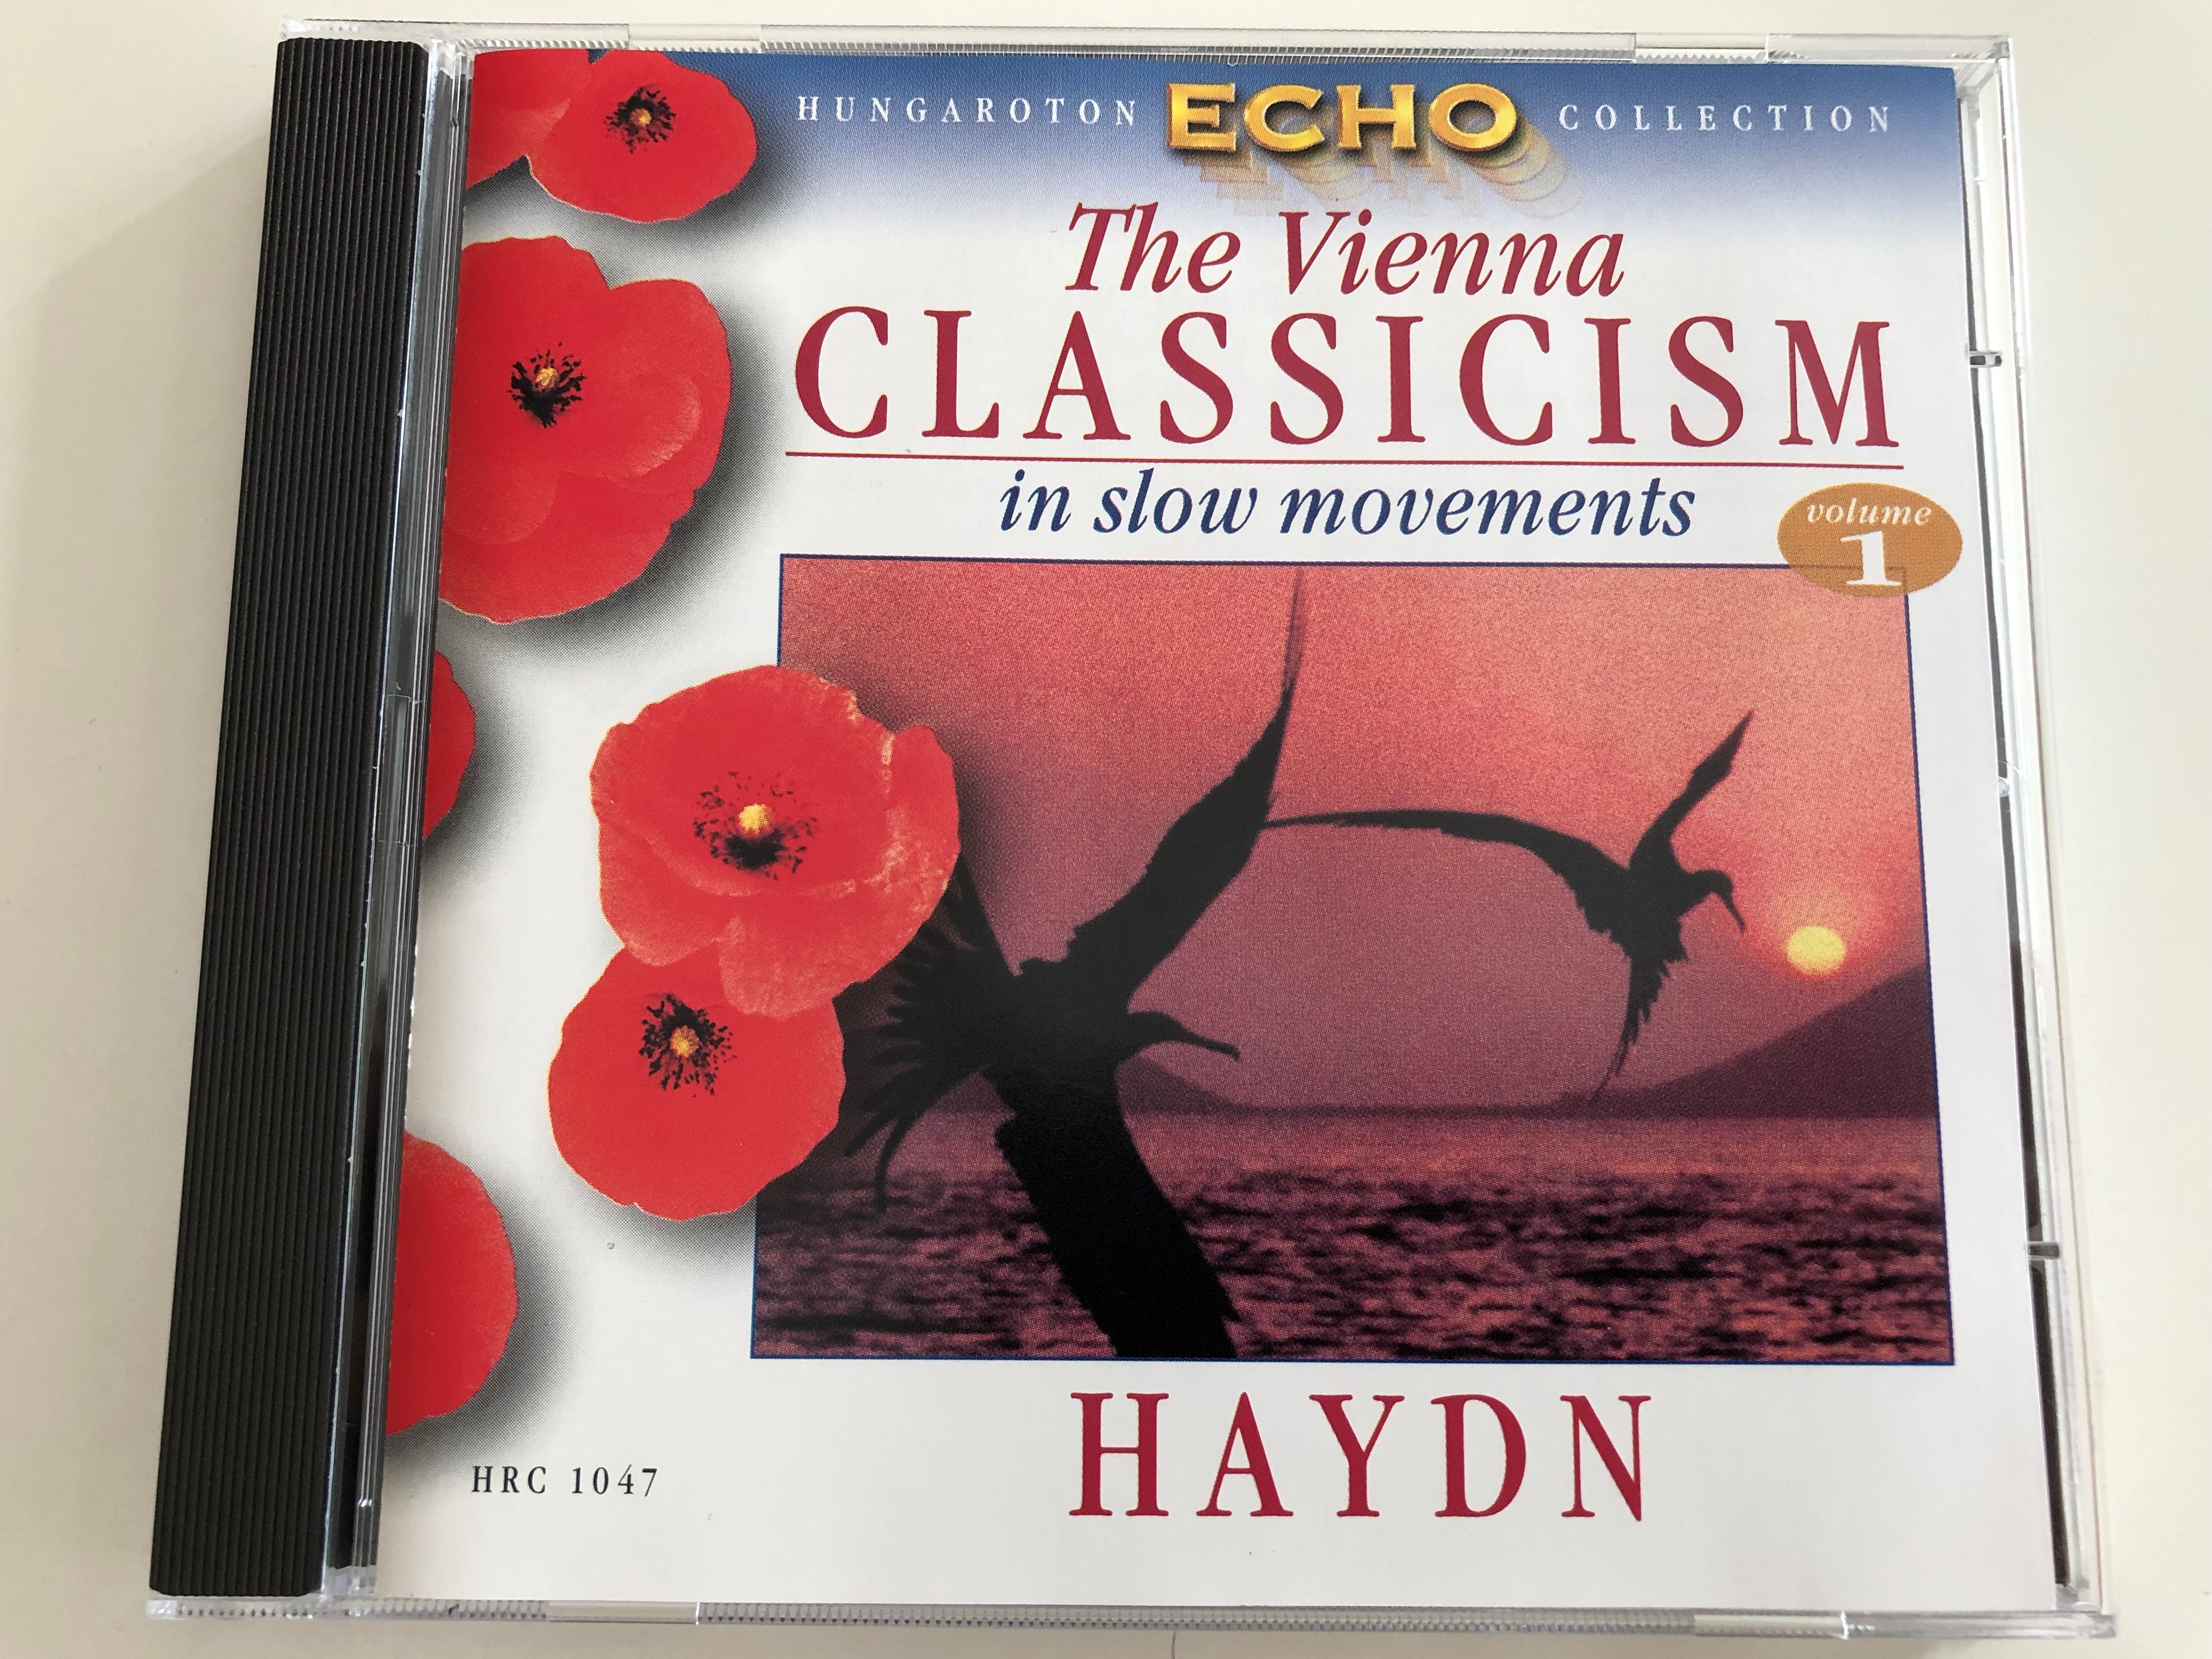 haydn-the-vienna-classicism-in-slow-movements-vol-1.-joseph-haydn-hungaroton-echo-collection-hrc-1047-1-.jpg